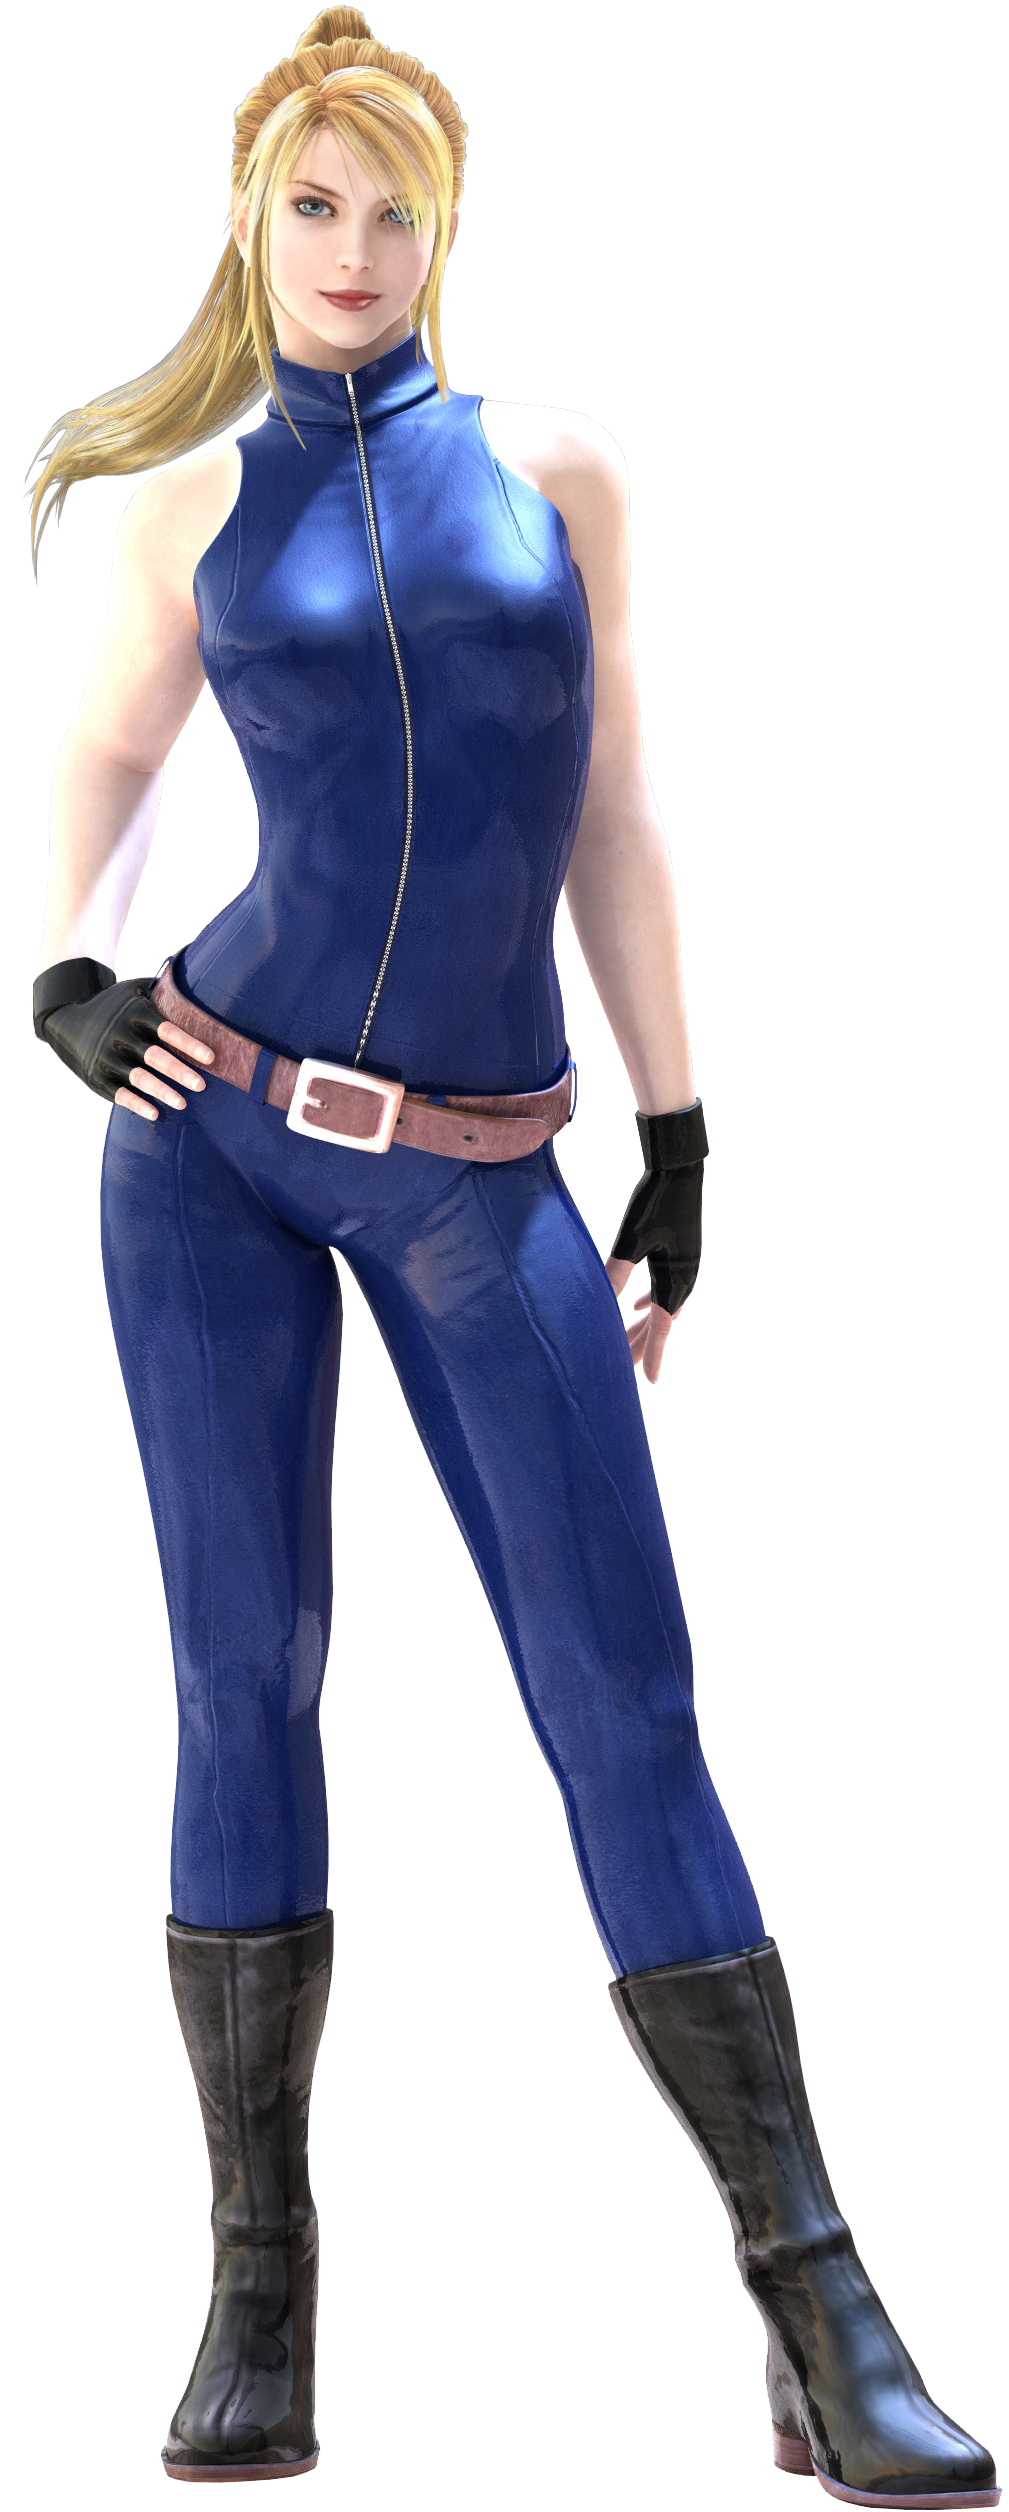 Video Games - Sarah Bryant Virtua Fighter (1009x2512)